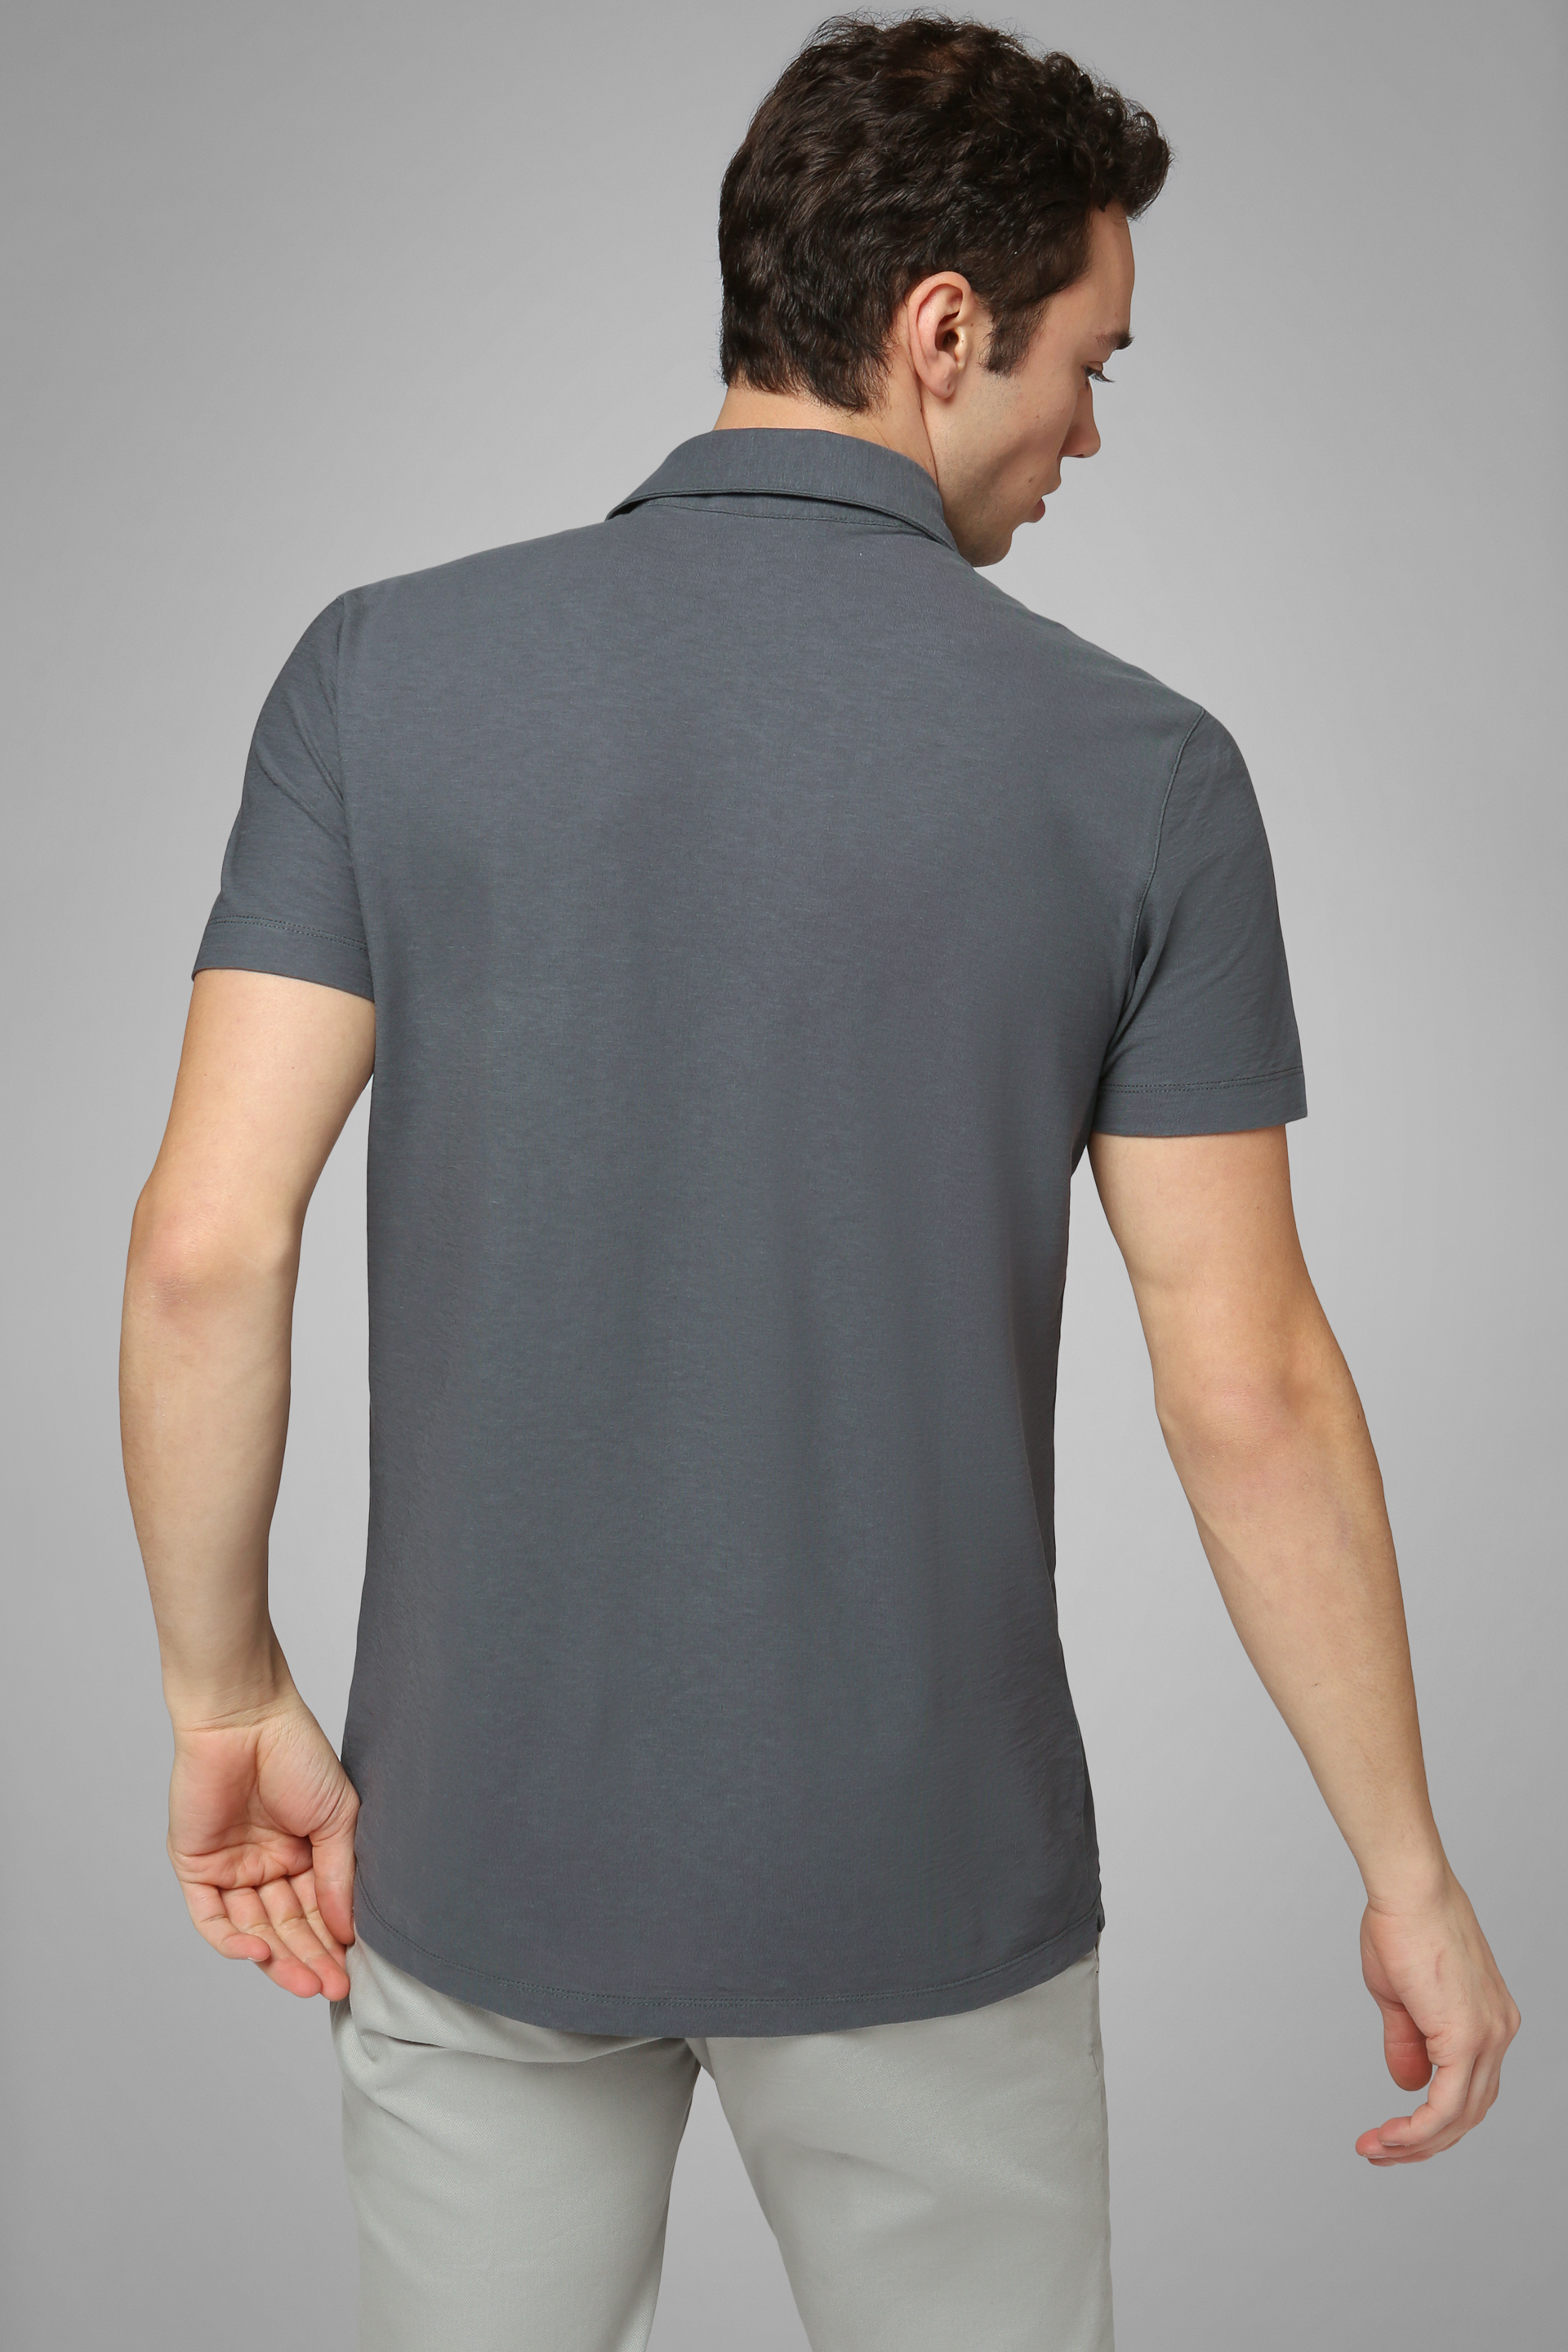 Men's Charcoal Grey Ultra-High Twist Cotton Jersey Polo Shirt